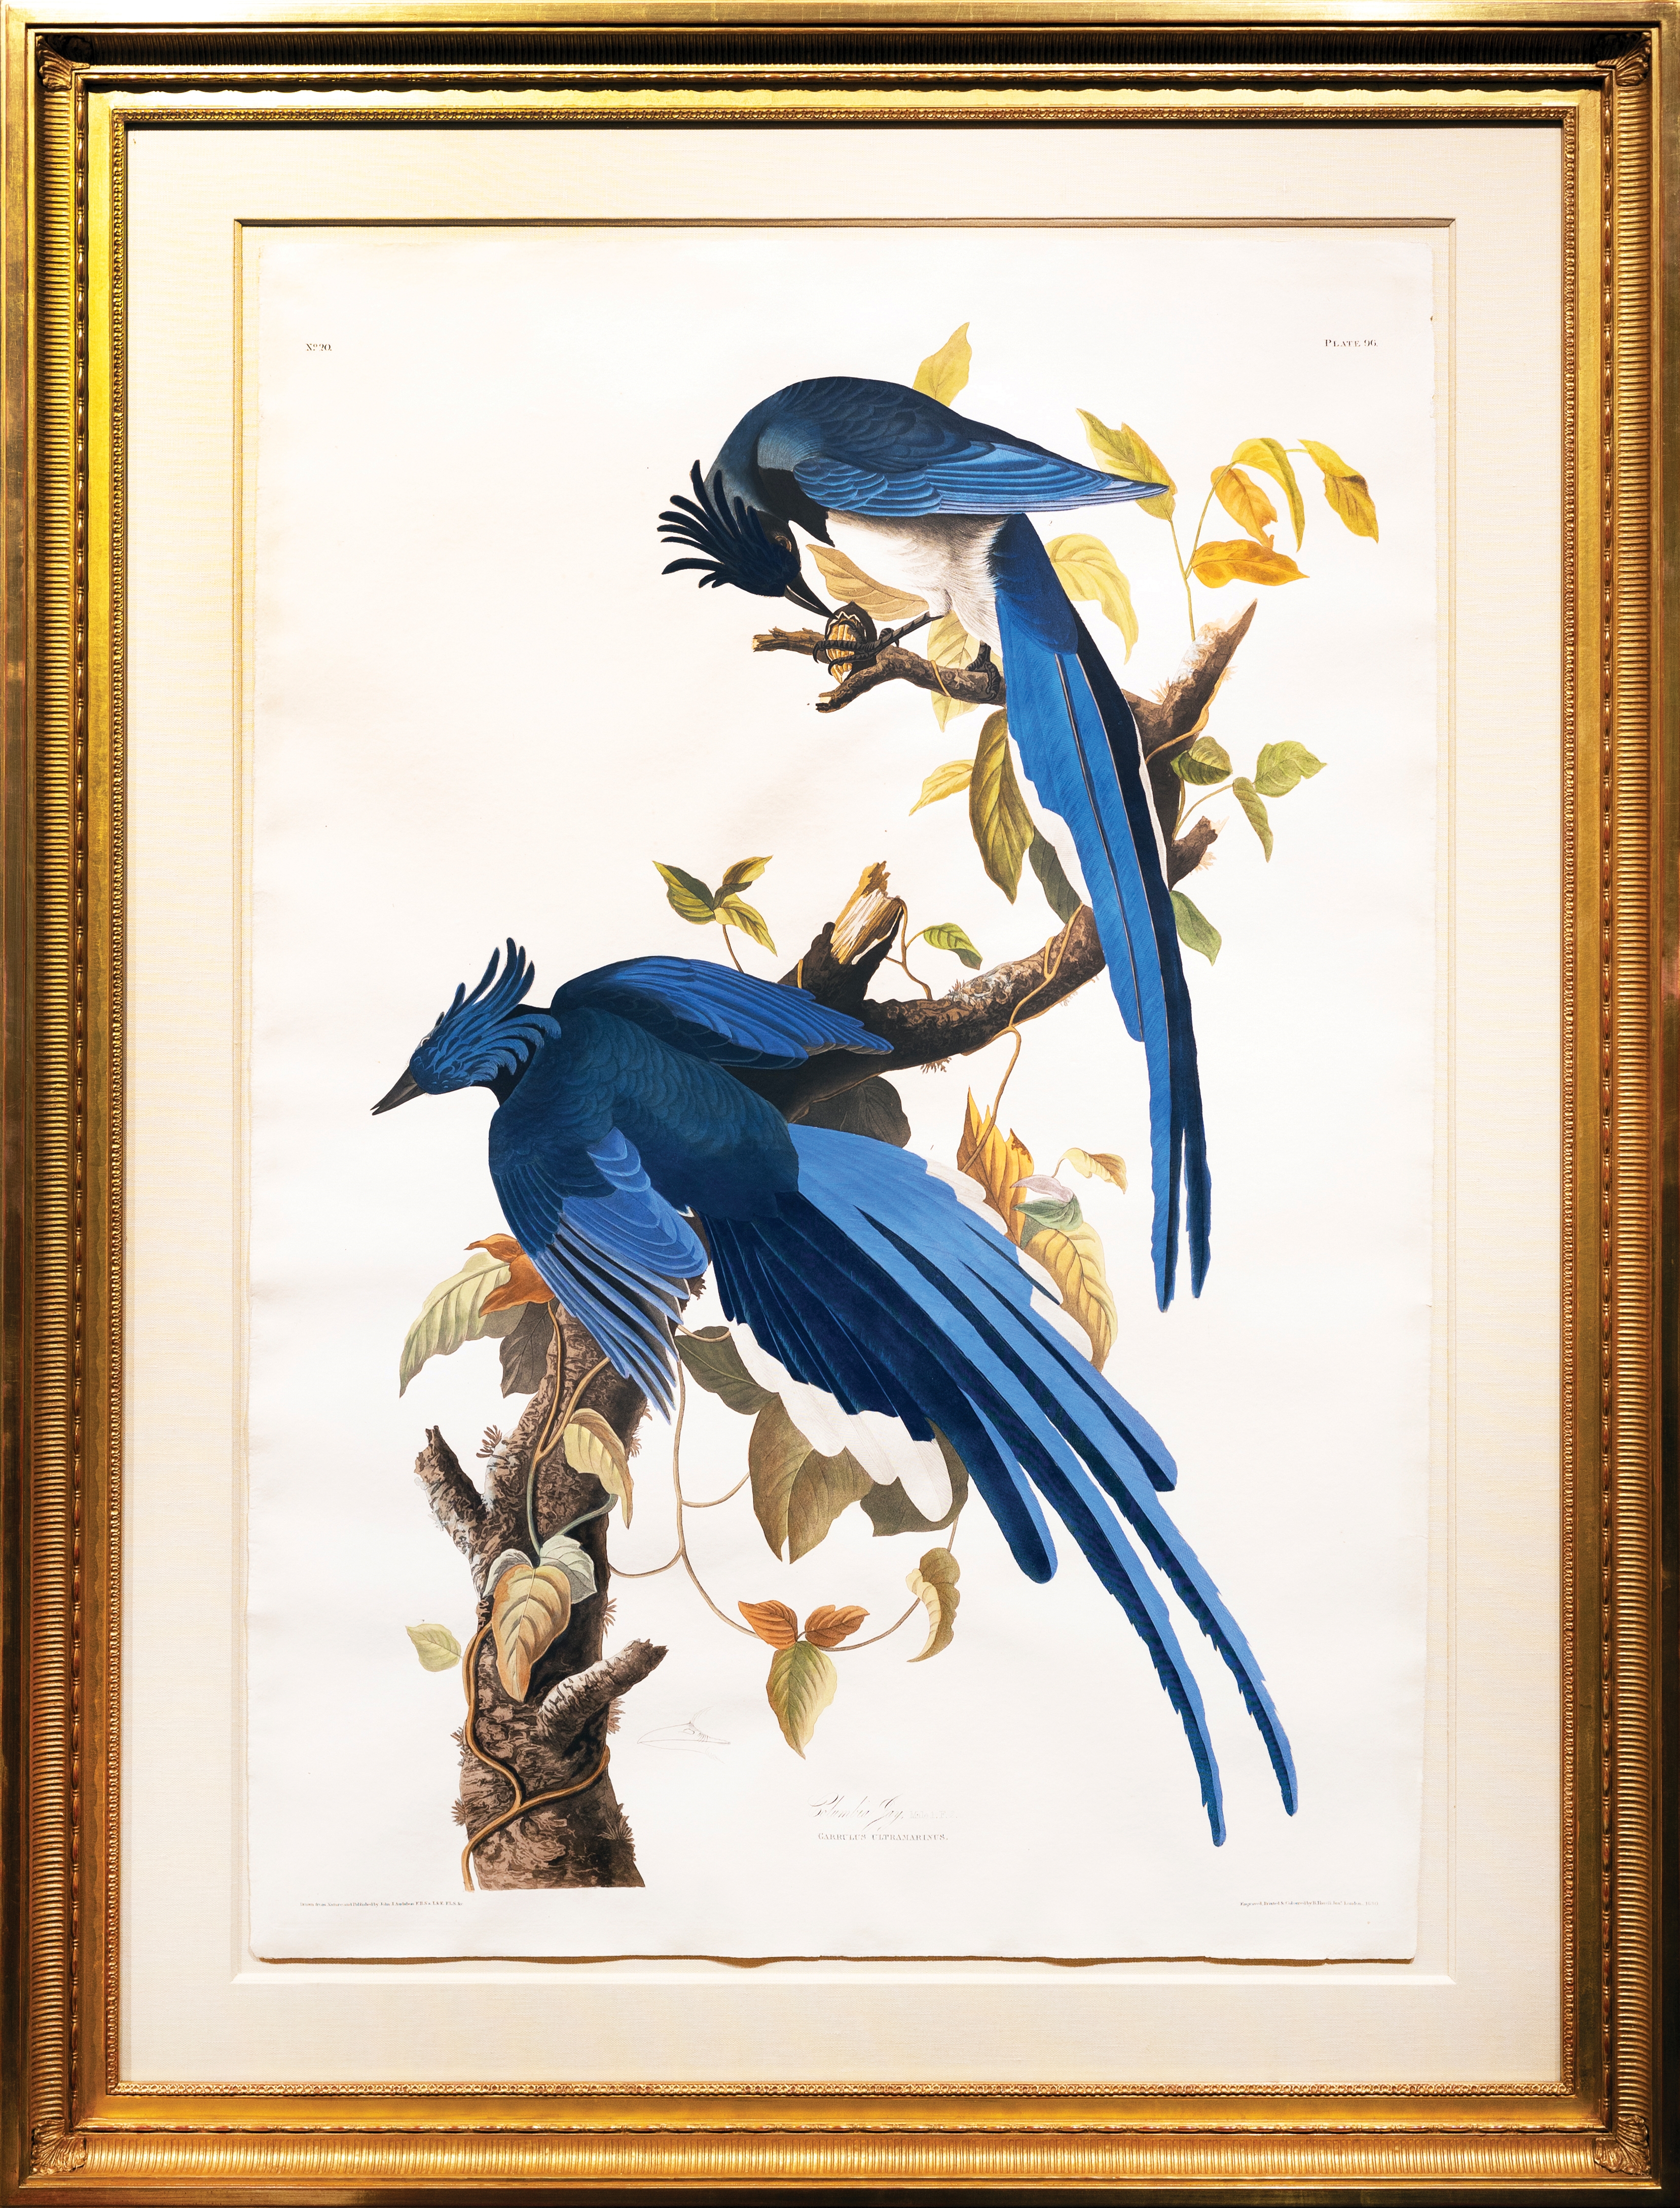 Artwork by John James Audubon, Audubon Aquatint, Columbia Jay, Made of Aquatint engraving